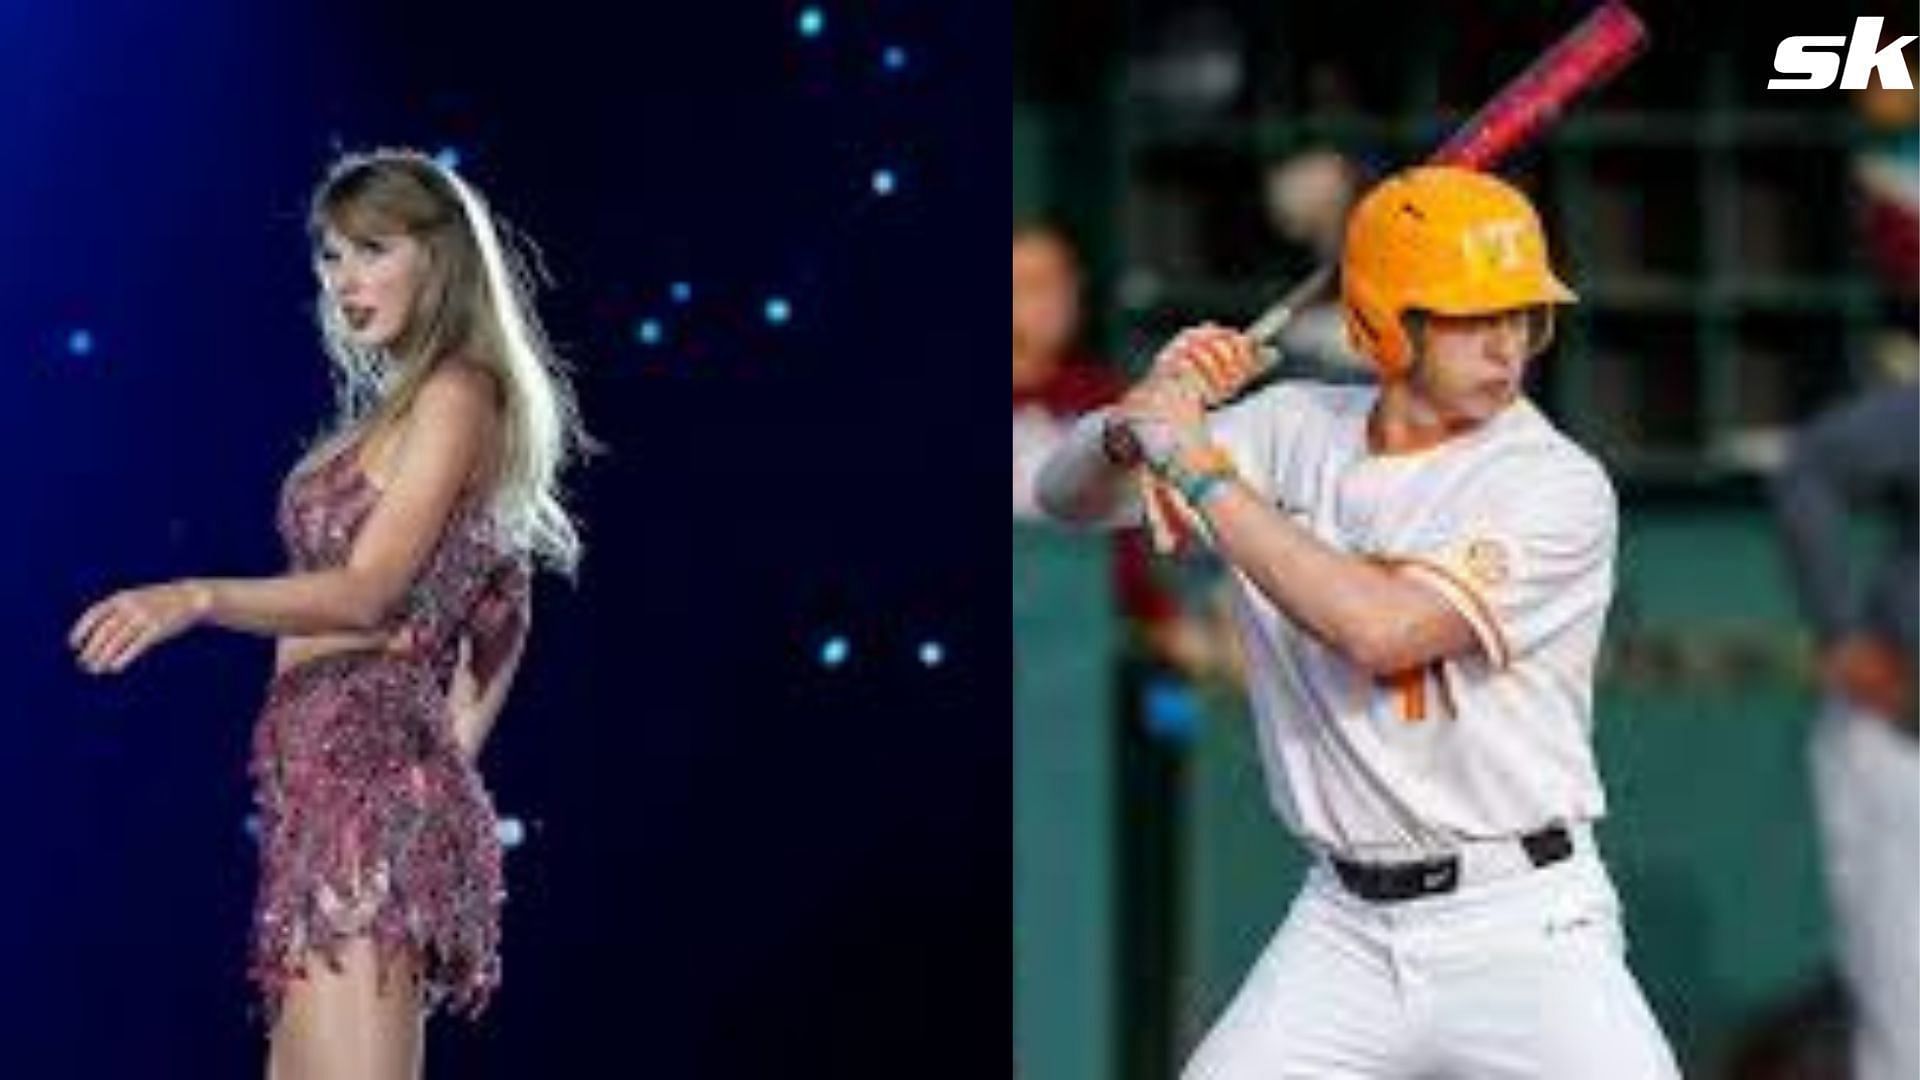 Zane Denton and singer Taylor Swift 